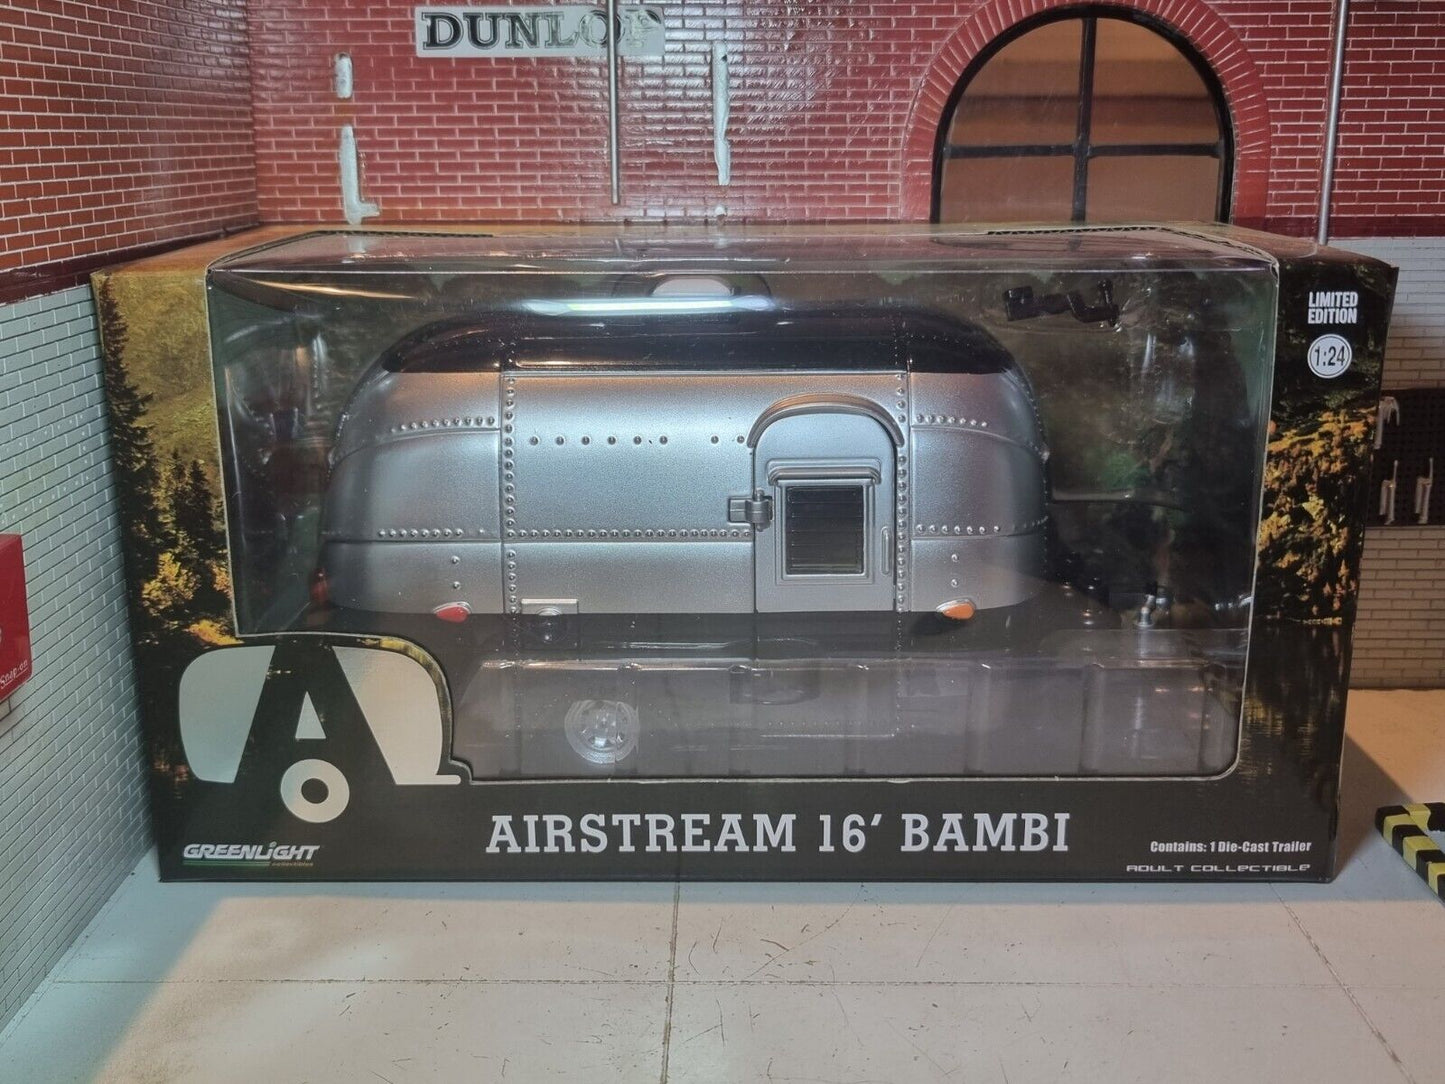 Airstream Bambi Caravan Trailer 16ft 18226 Greenlight 1:24